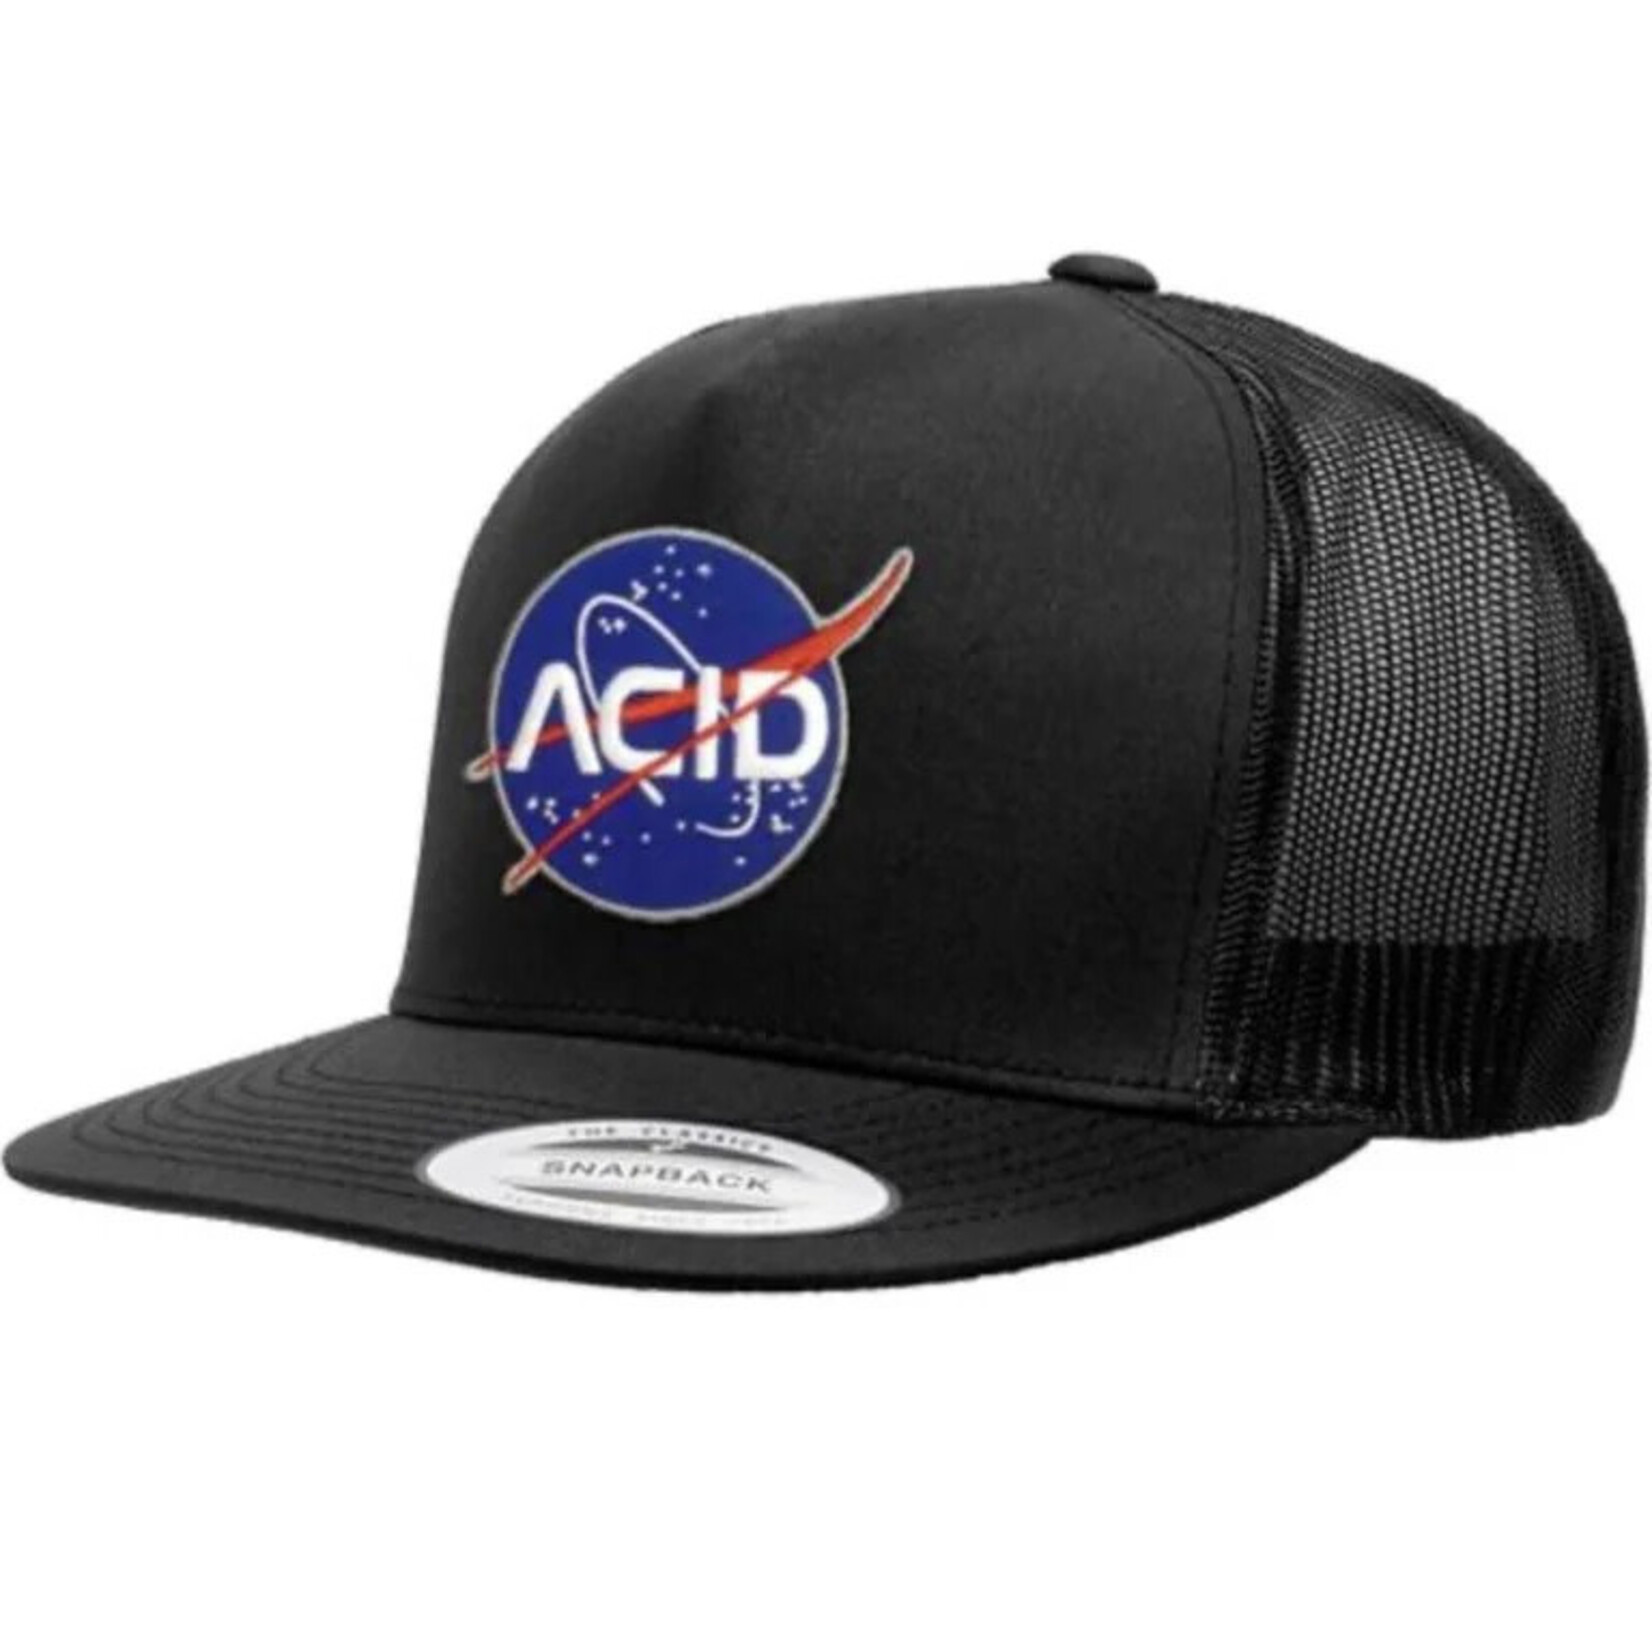 Acid Chemical Co. Acid Space Snapback Hat - Black